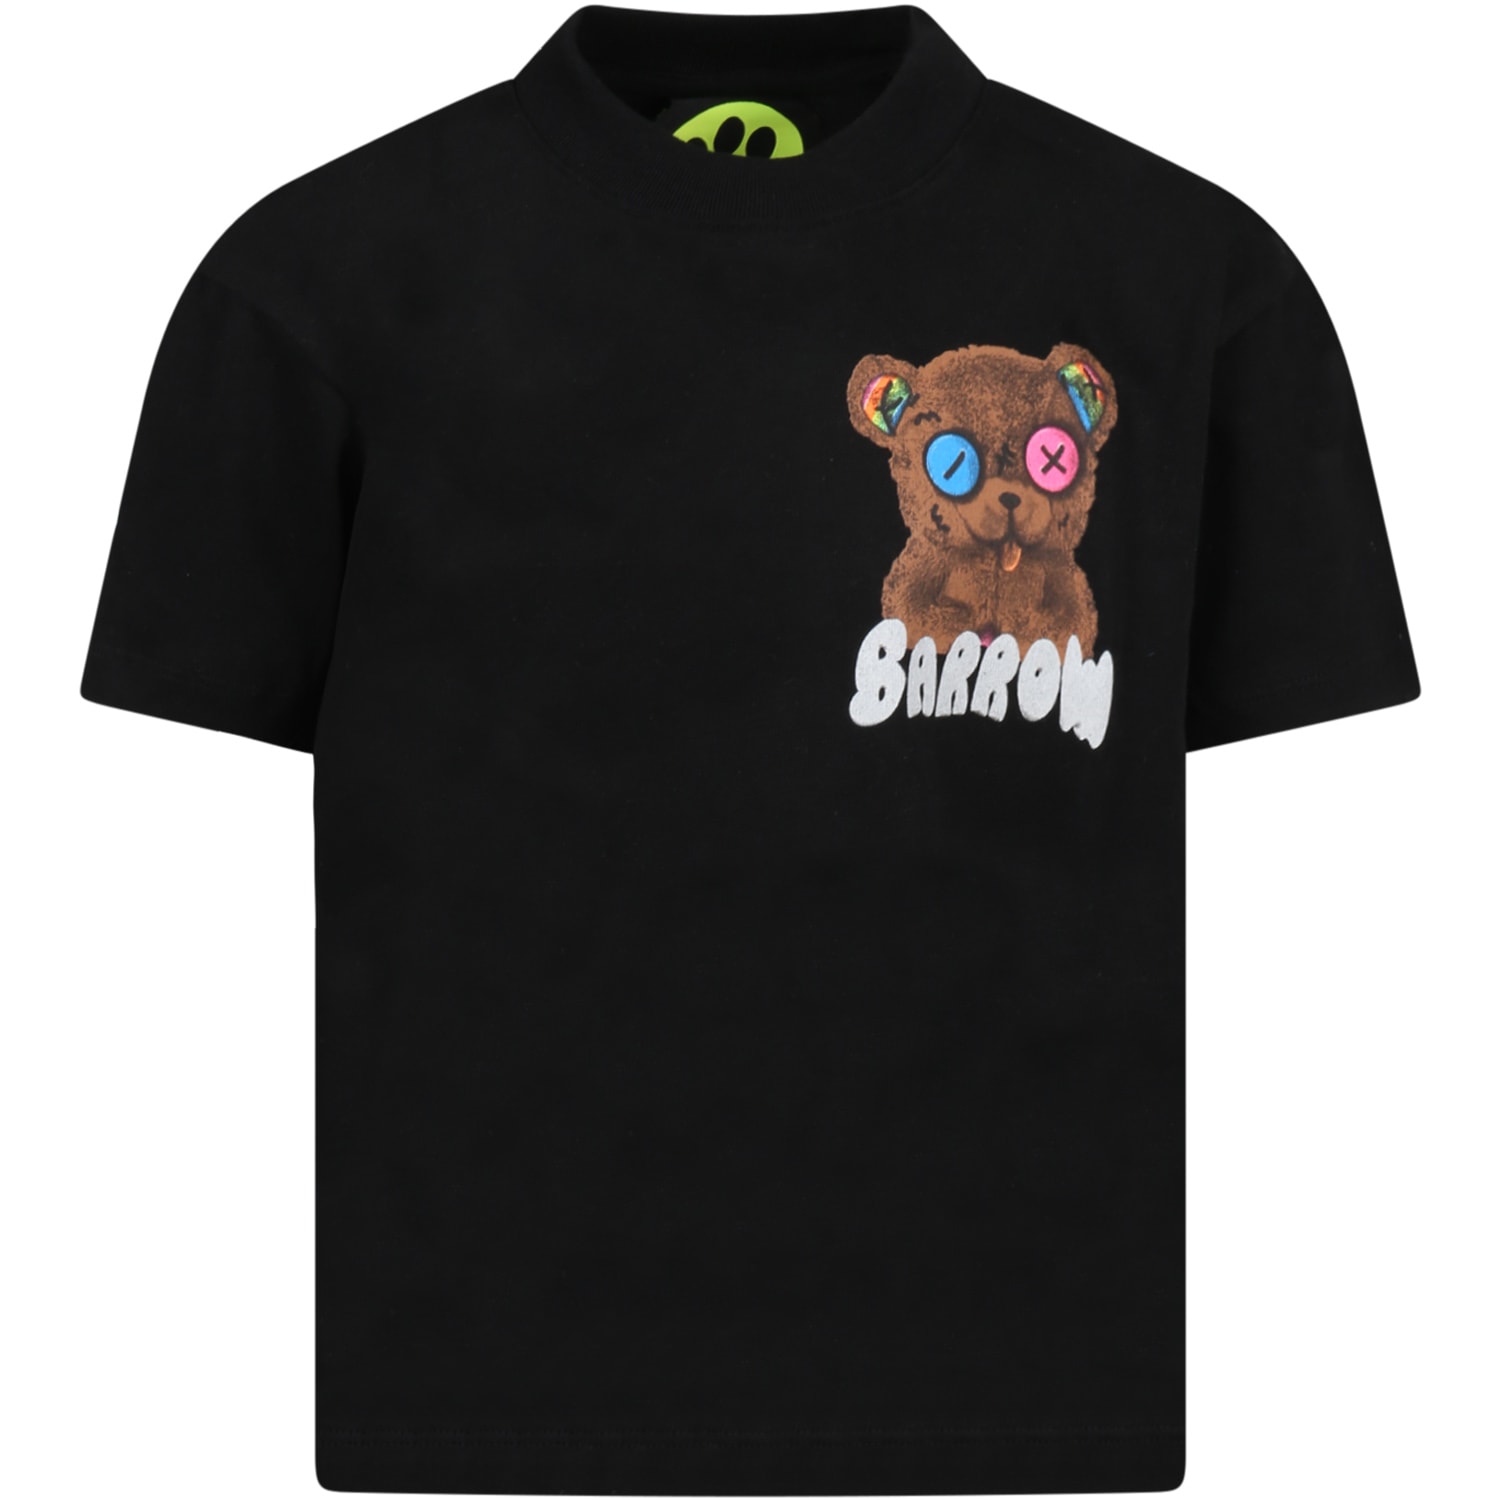 Barrow Black T-shirt For Kids With Bear